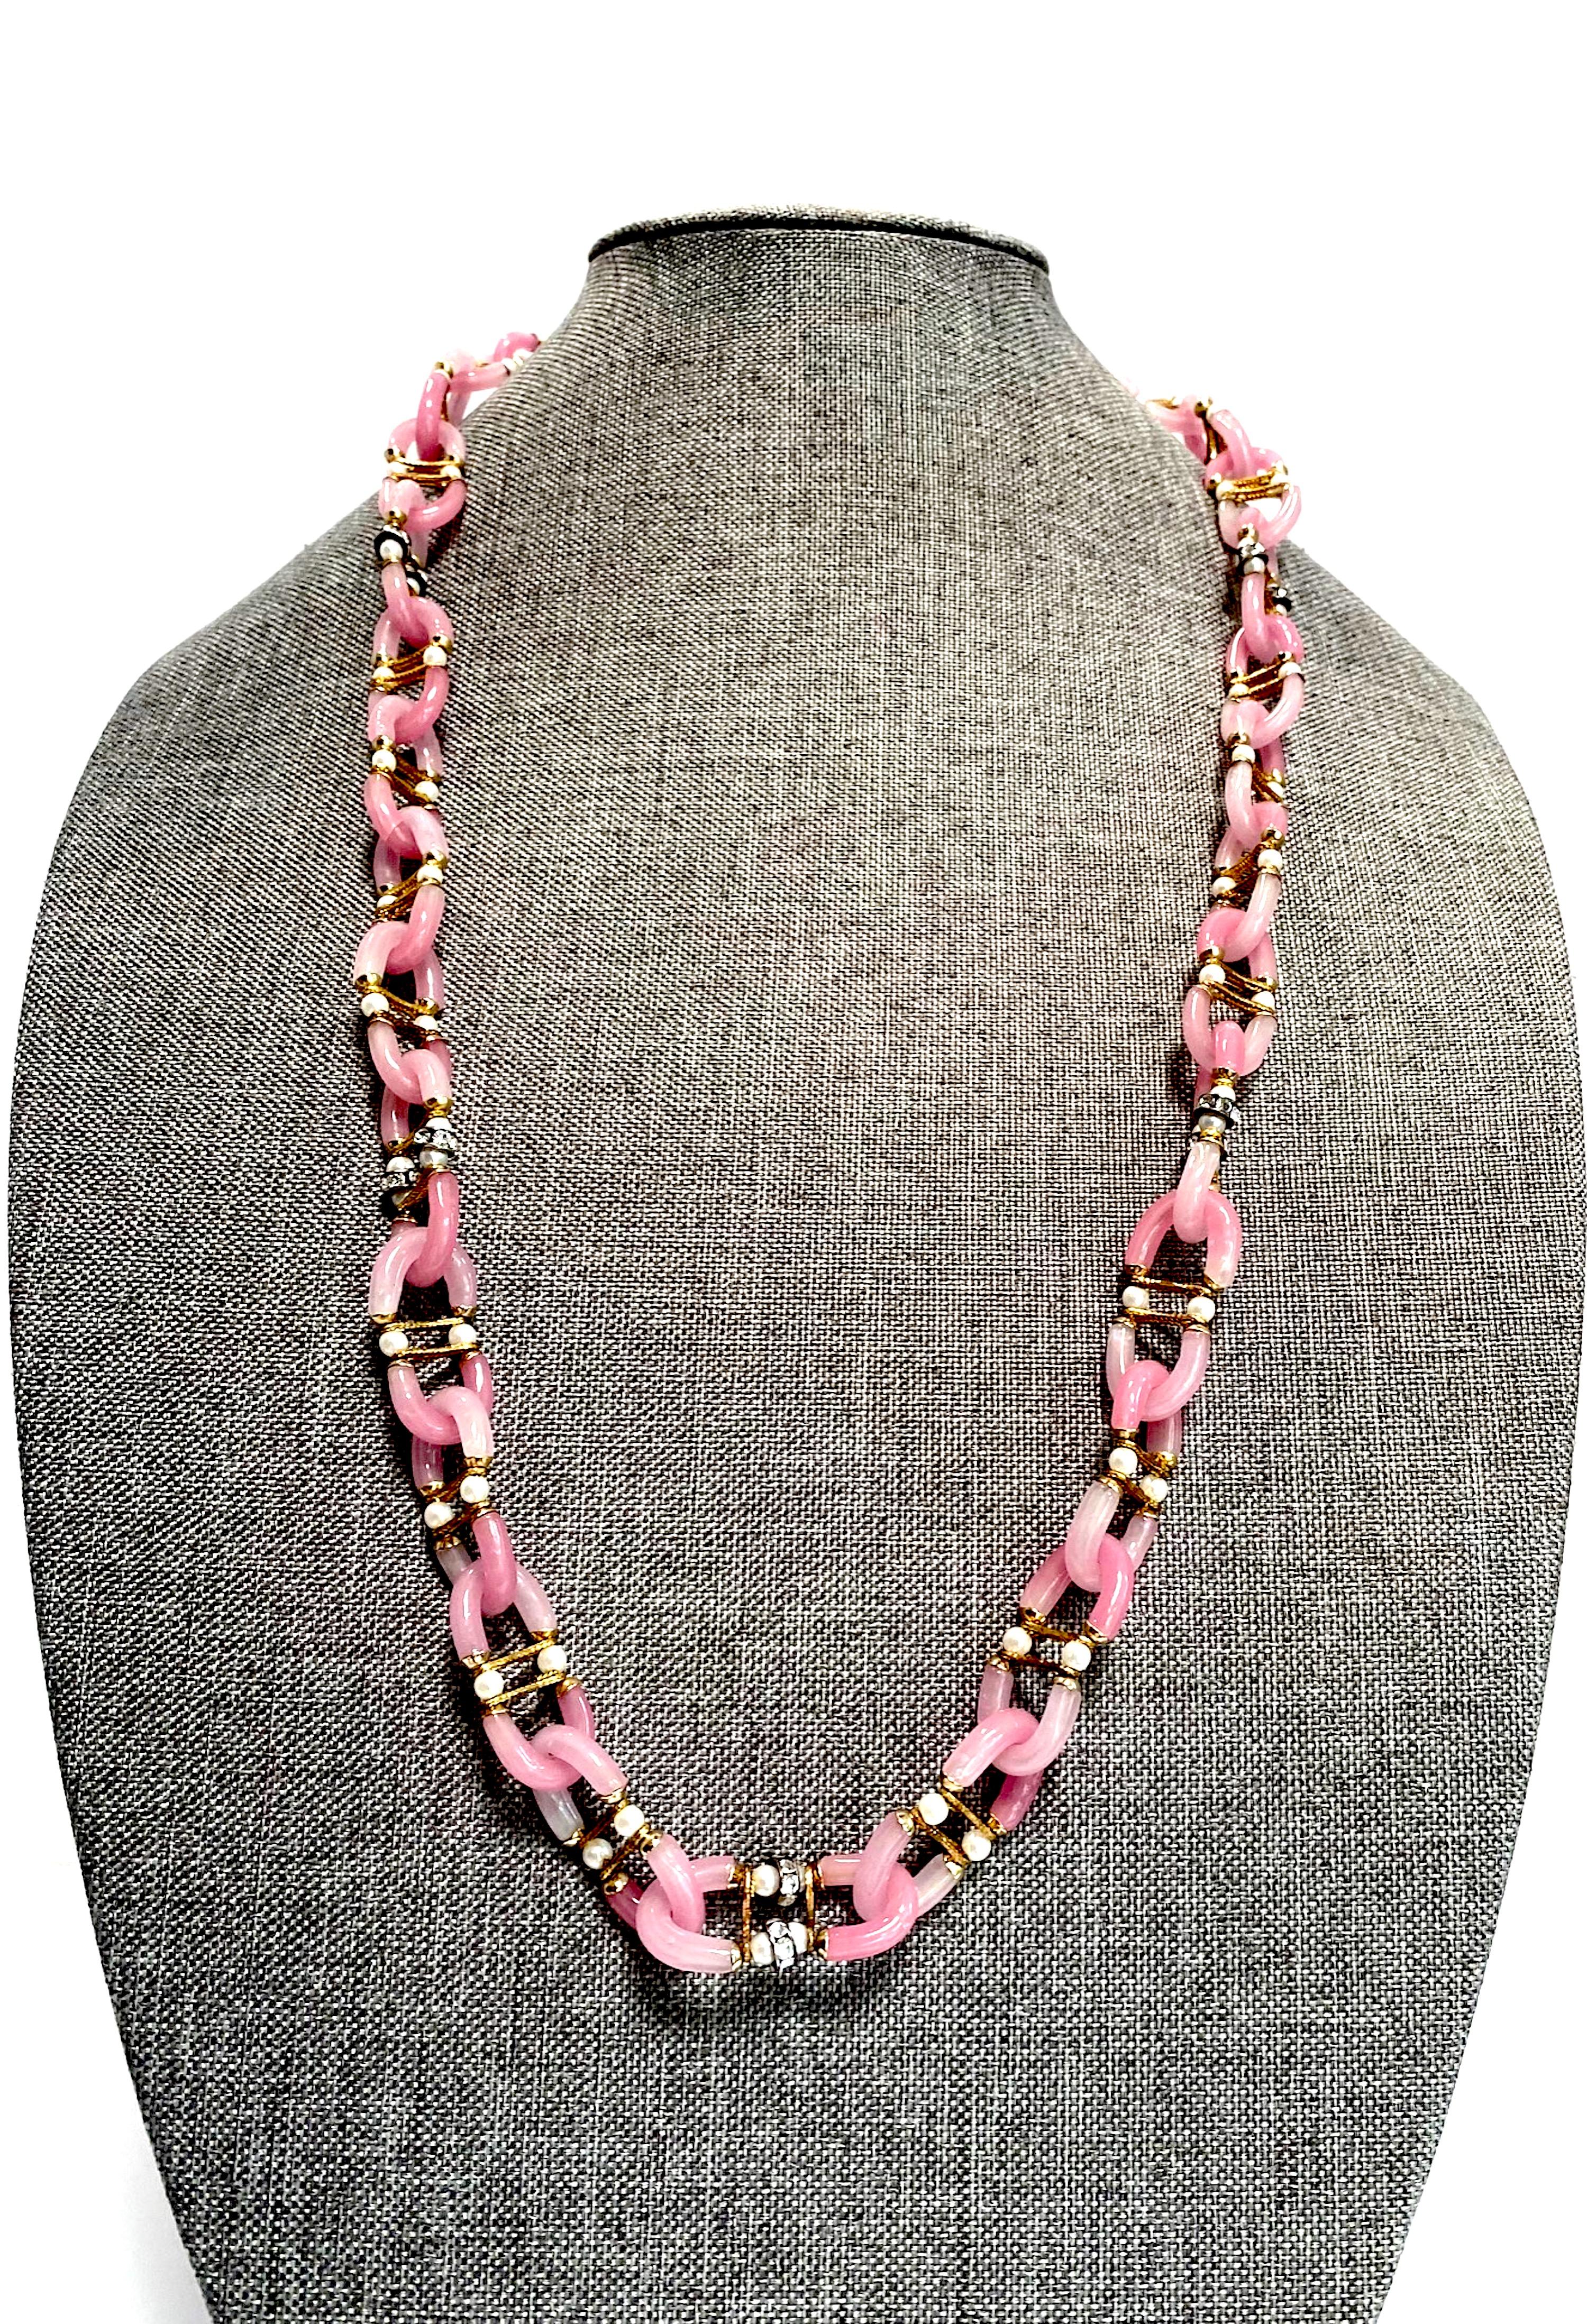 Women's Archimede Seguso, Vetri d'Arte, for Chanel Rose Pink Glass Chain Necklace, 1960s